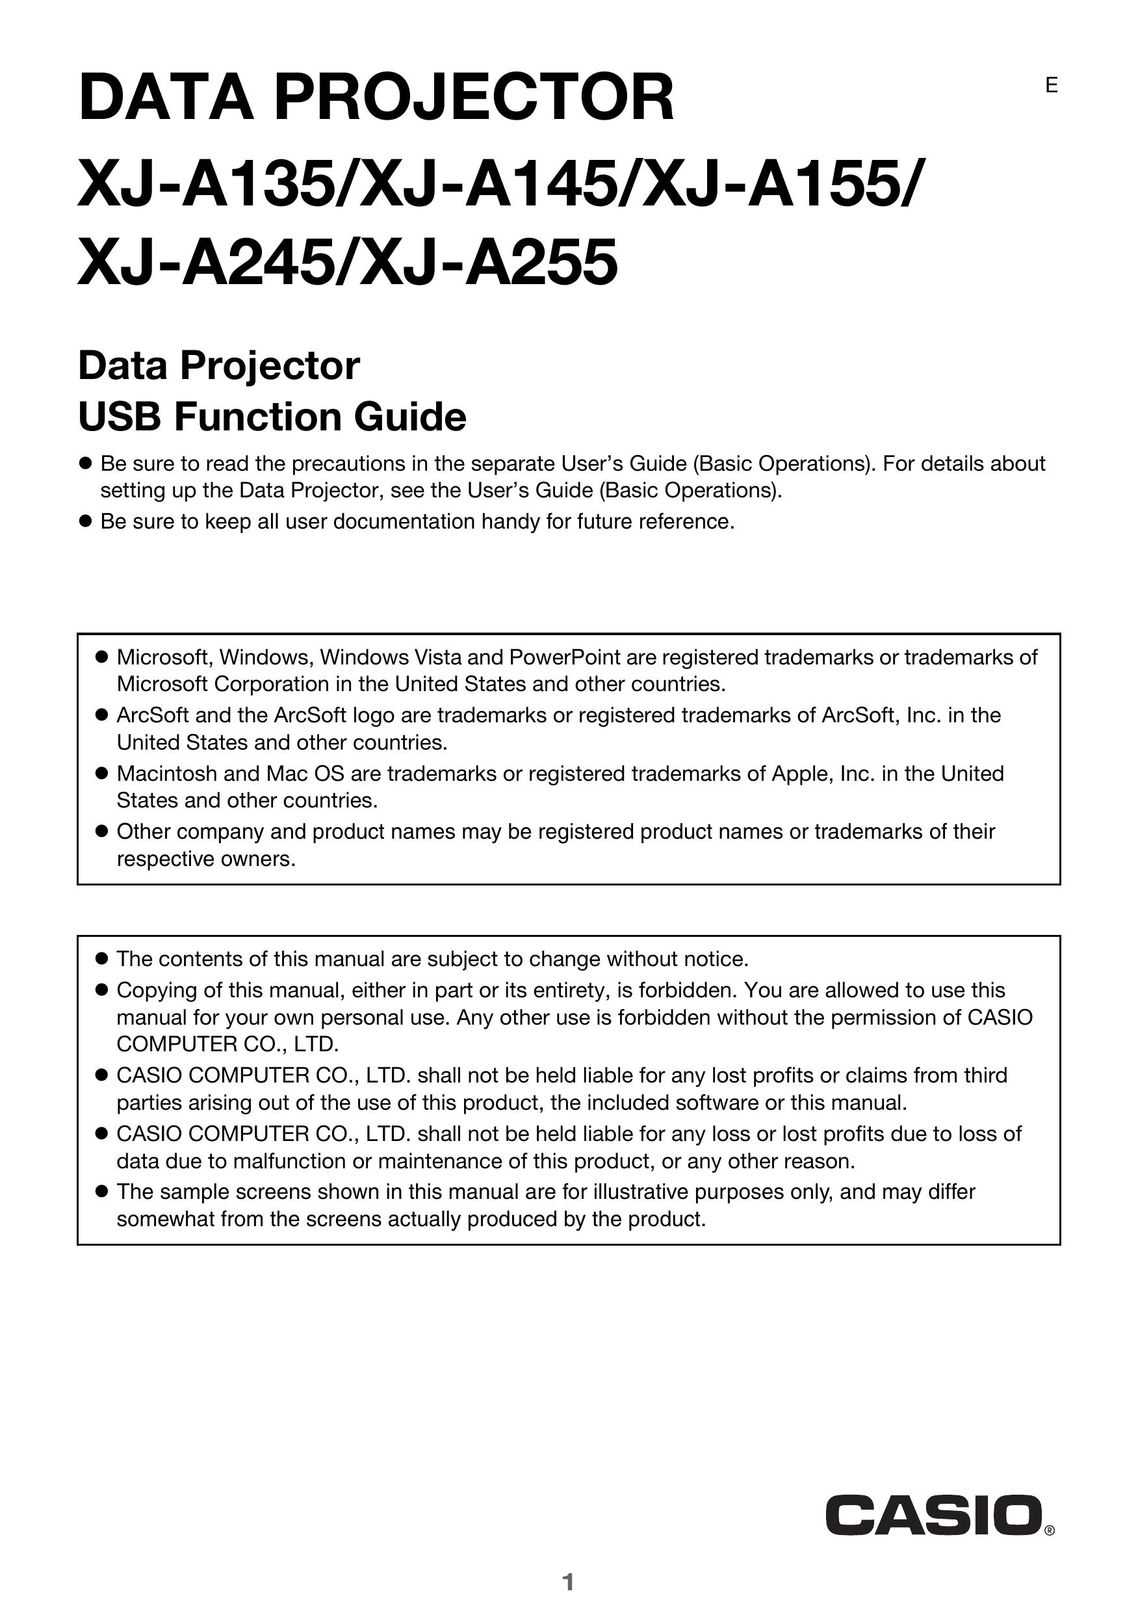 Casio XJ-A155 Projector User Manual